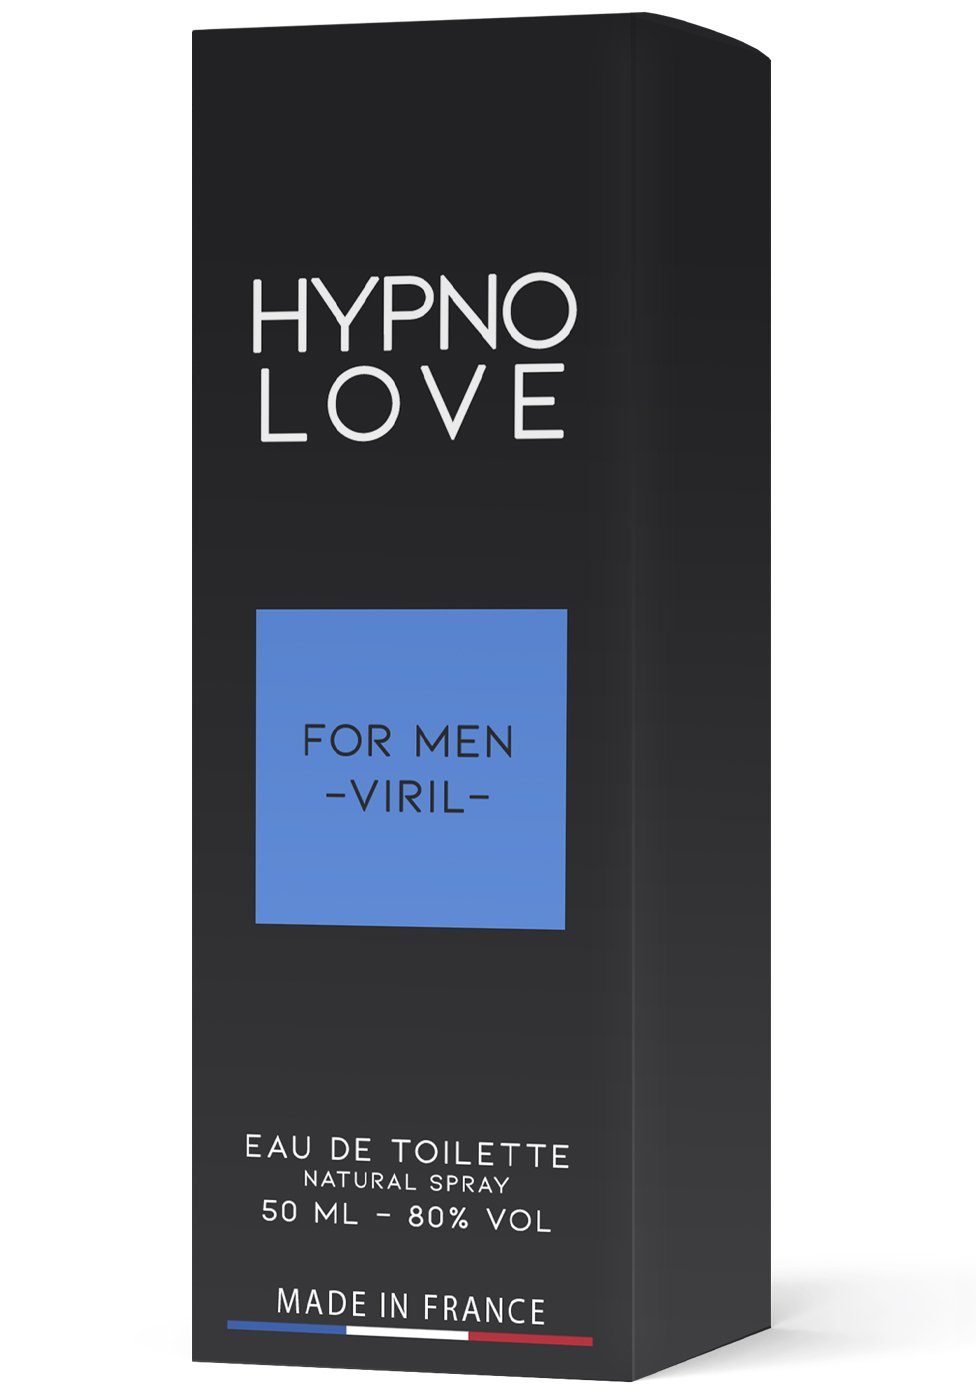 for Men Parfum Ruf Eau de Hypno-Love Parfum